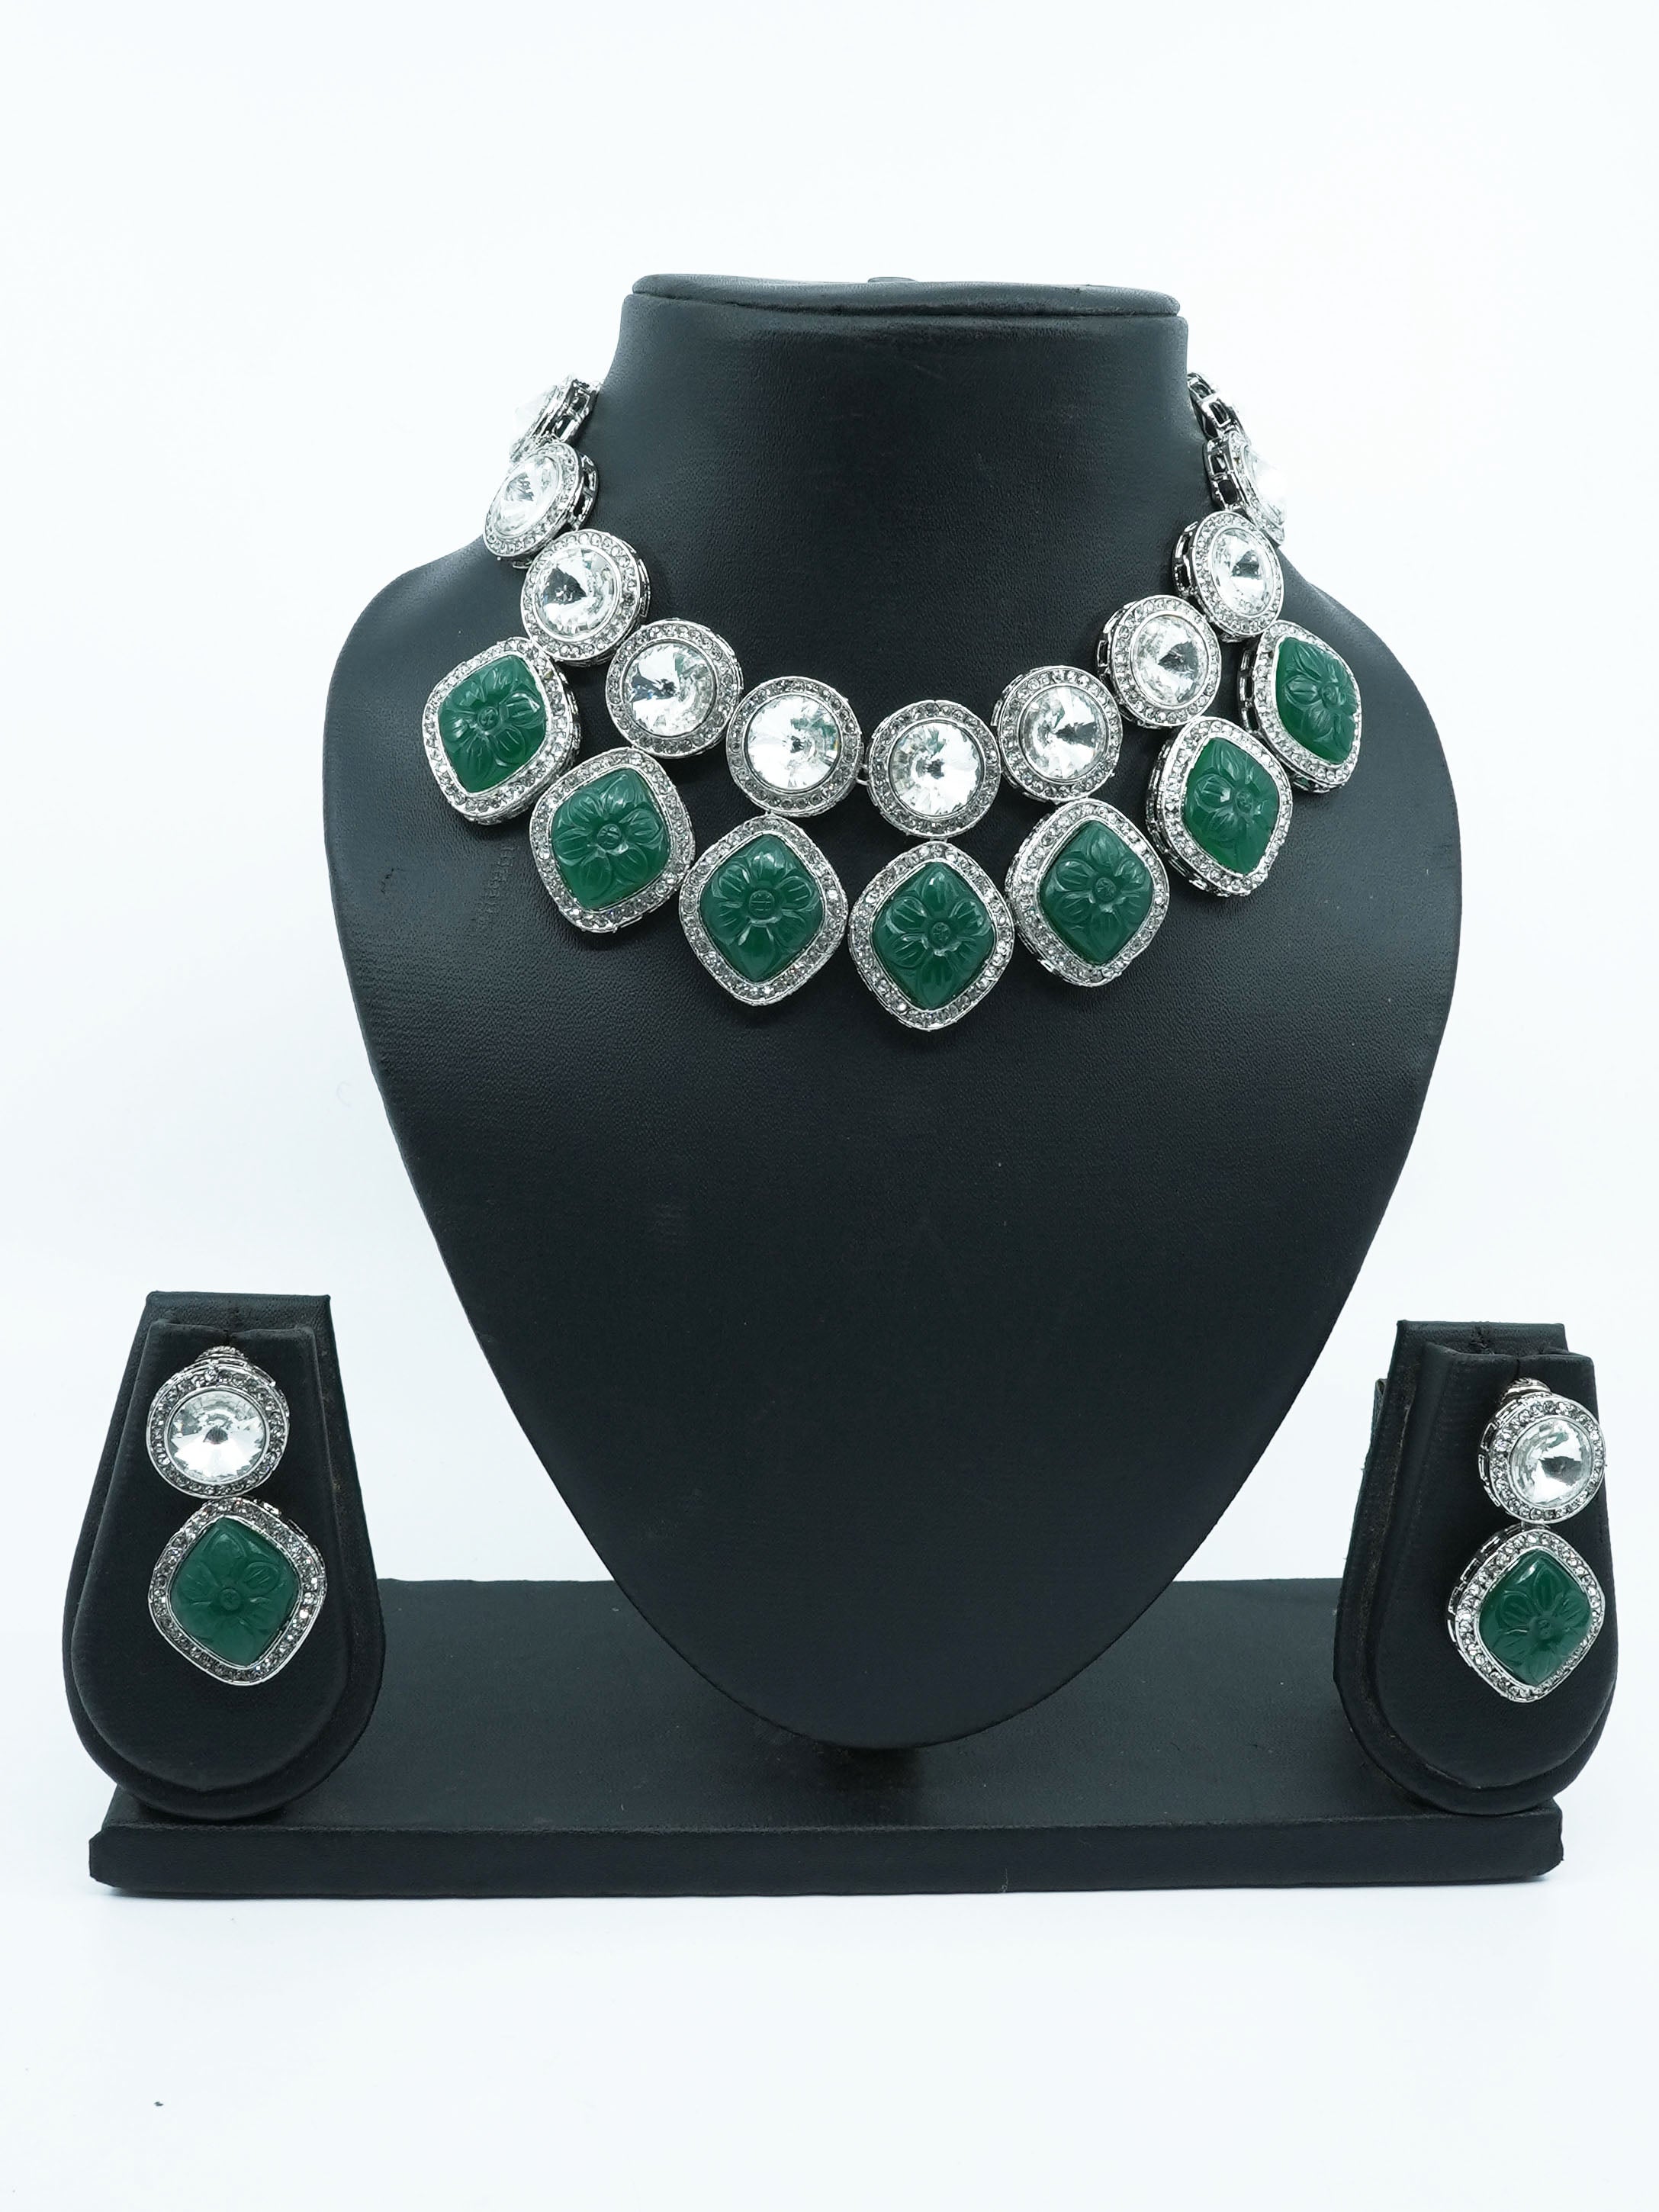 Designer Monalisa colored stones Necklace set 11584